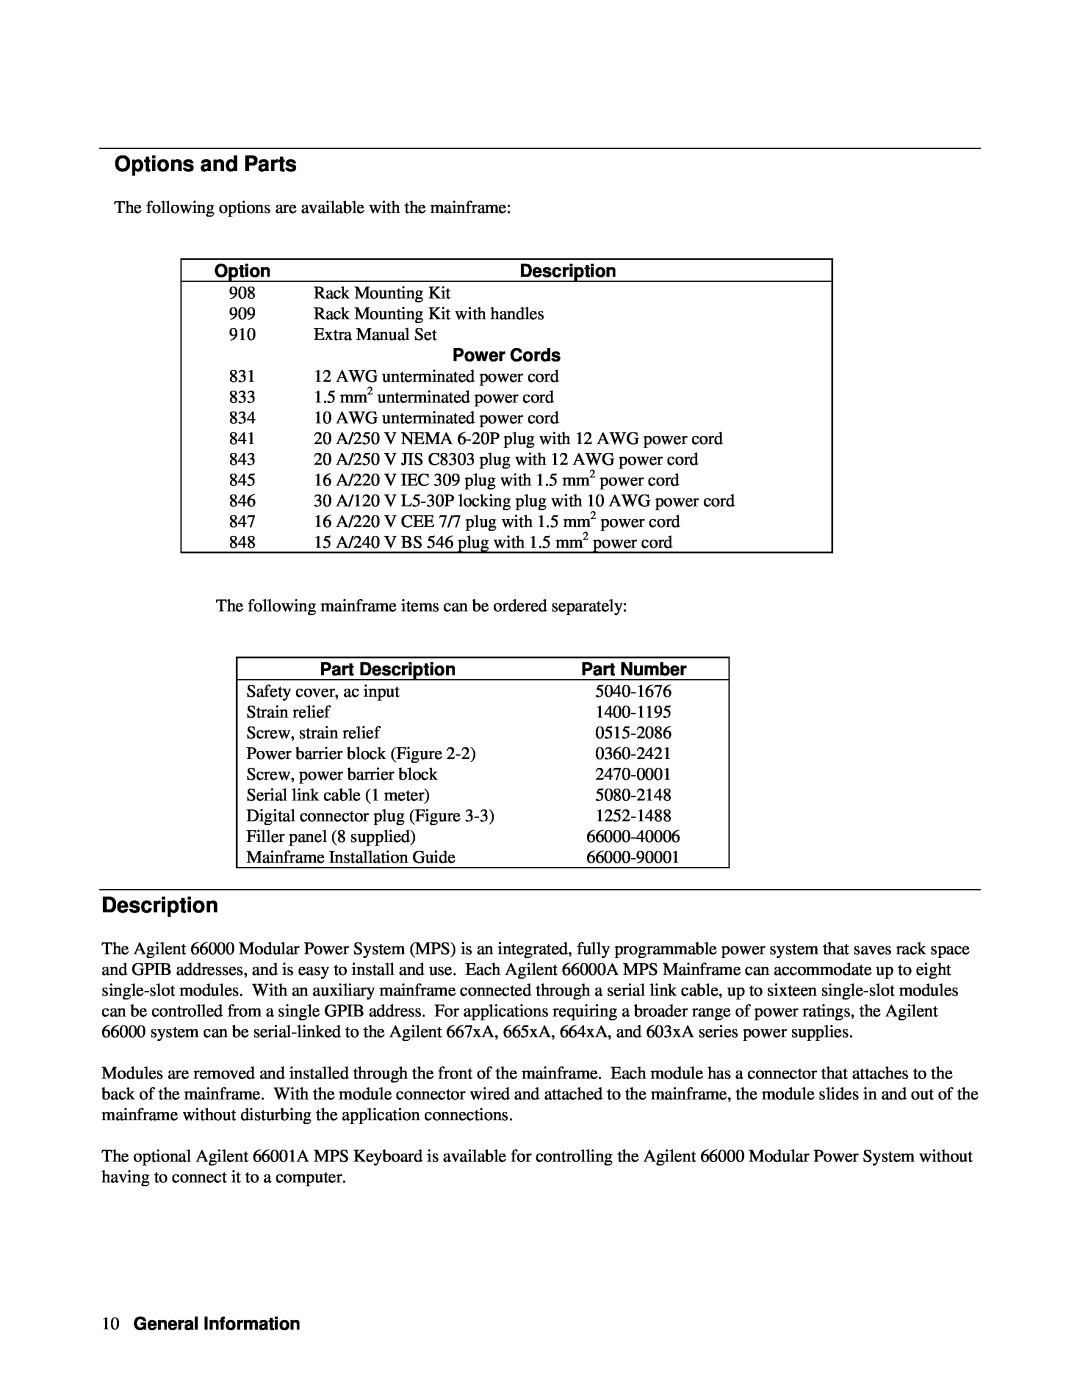 Agilent Technologies 66000A manual Options and Parts, Power Cords, Part Description, Part Number, General Information 